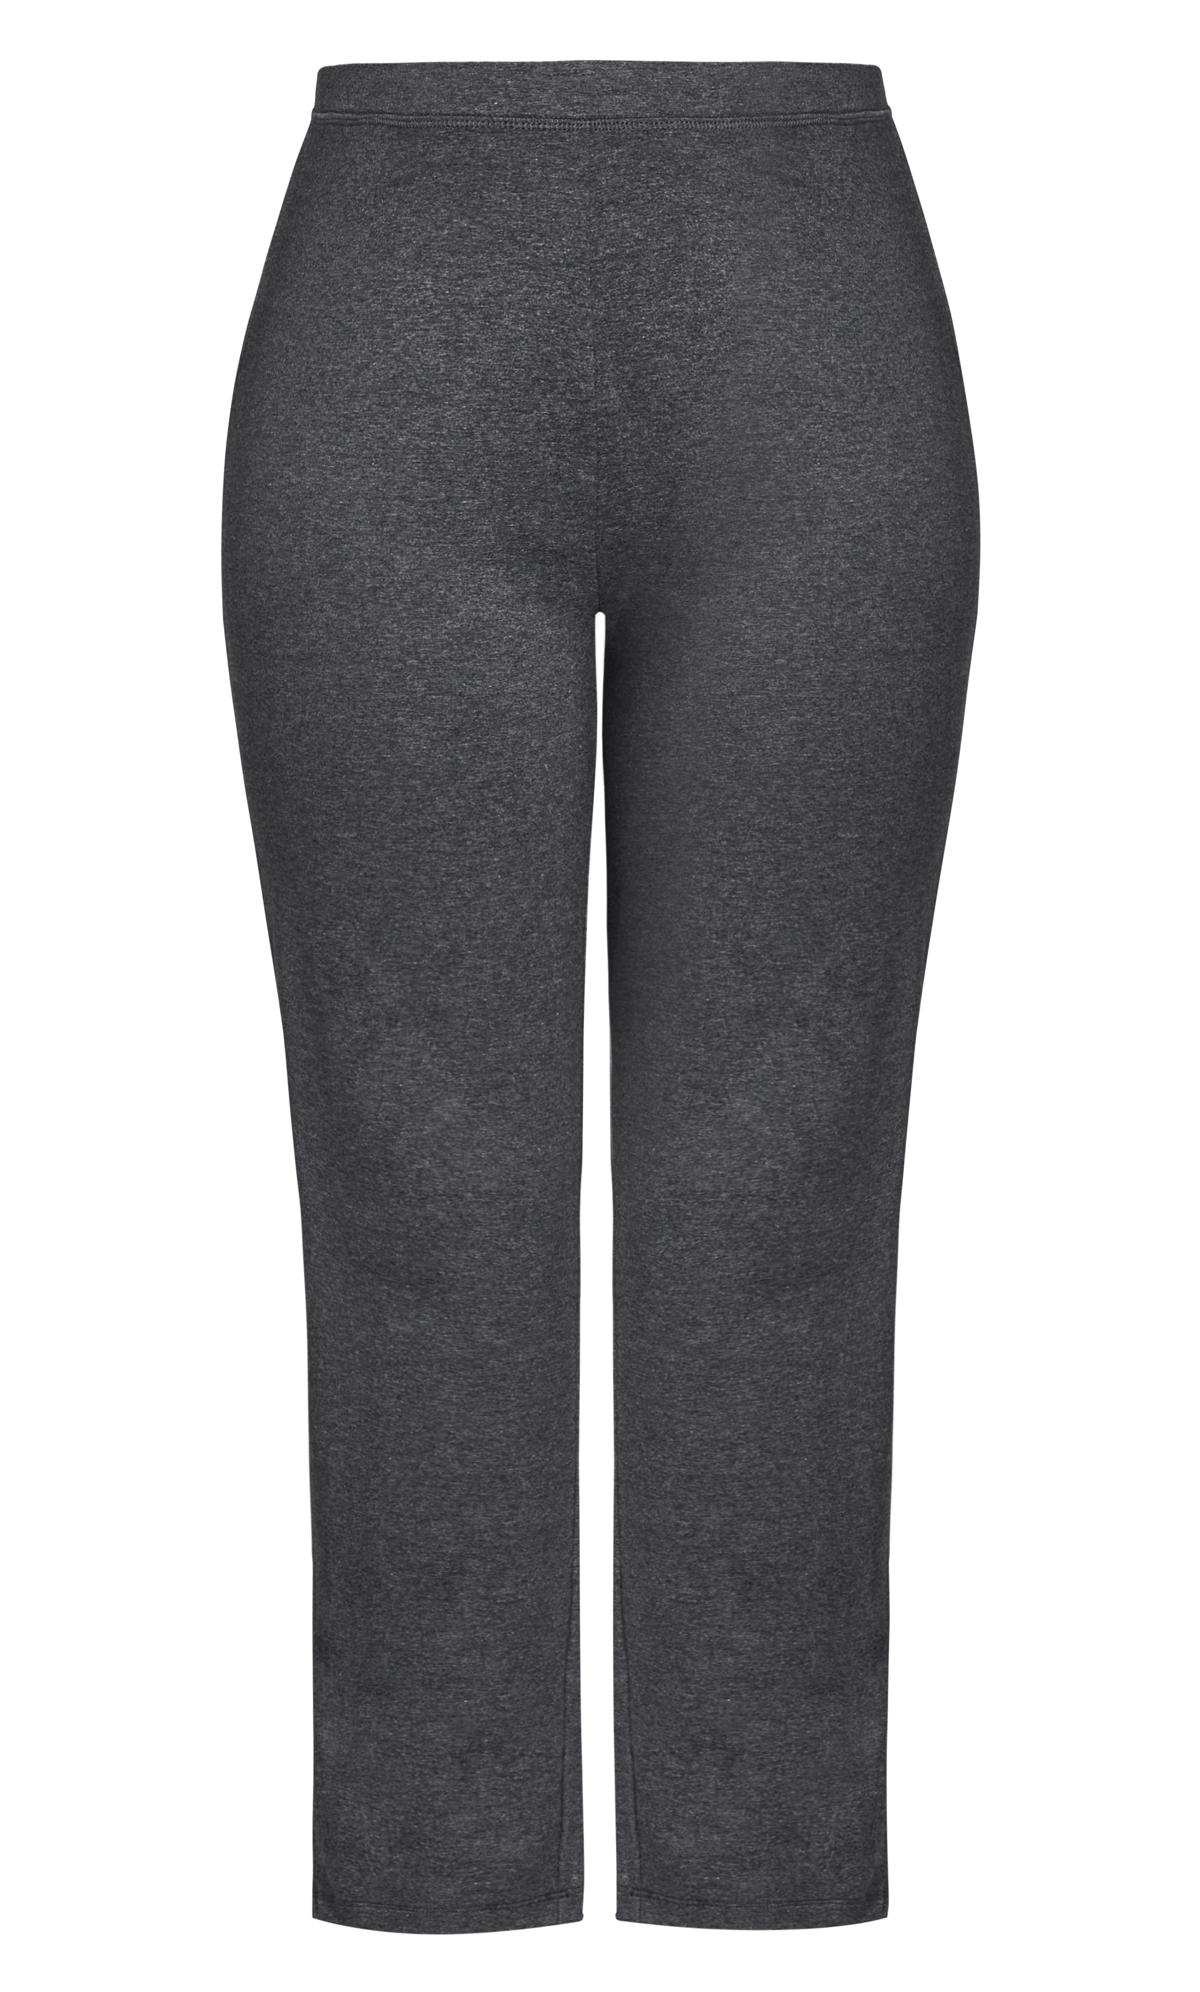 Xersion@ Charcoal Size Medium Ladies Exercise Pants